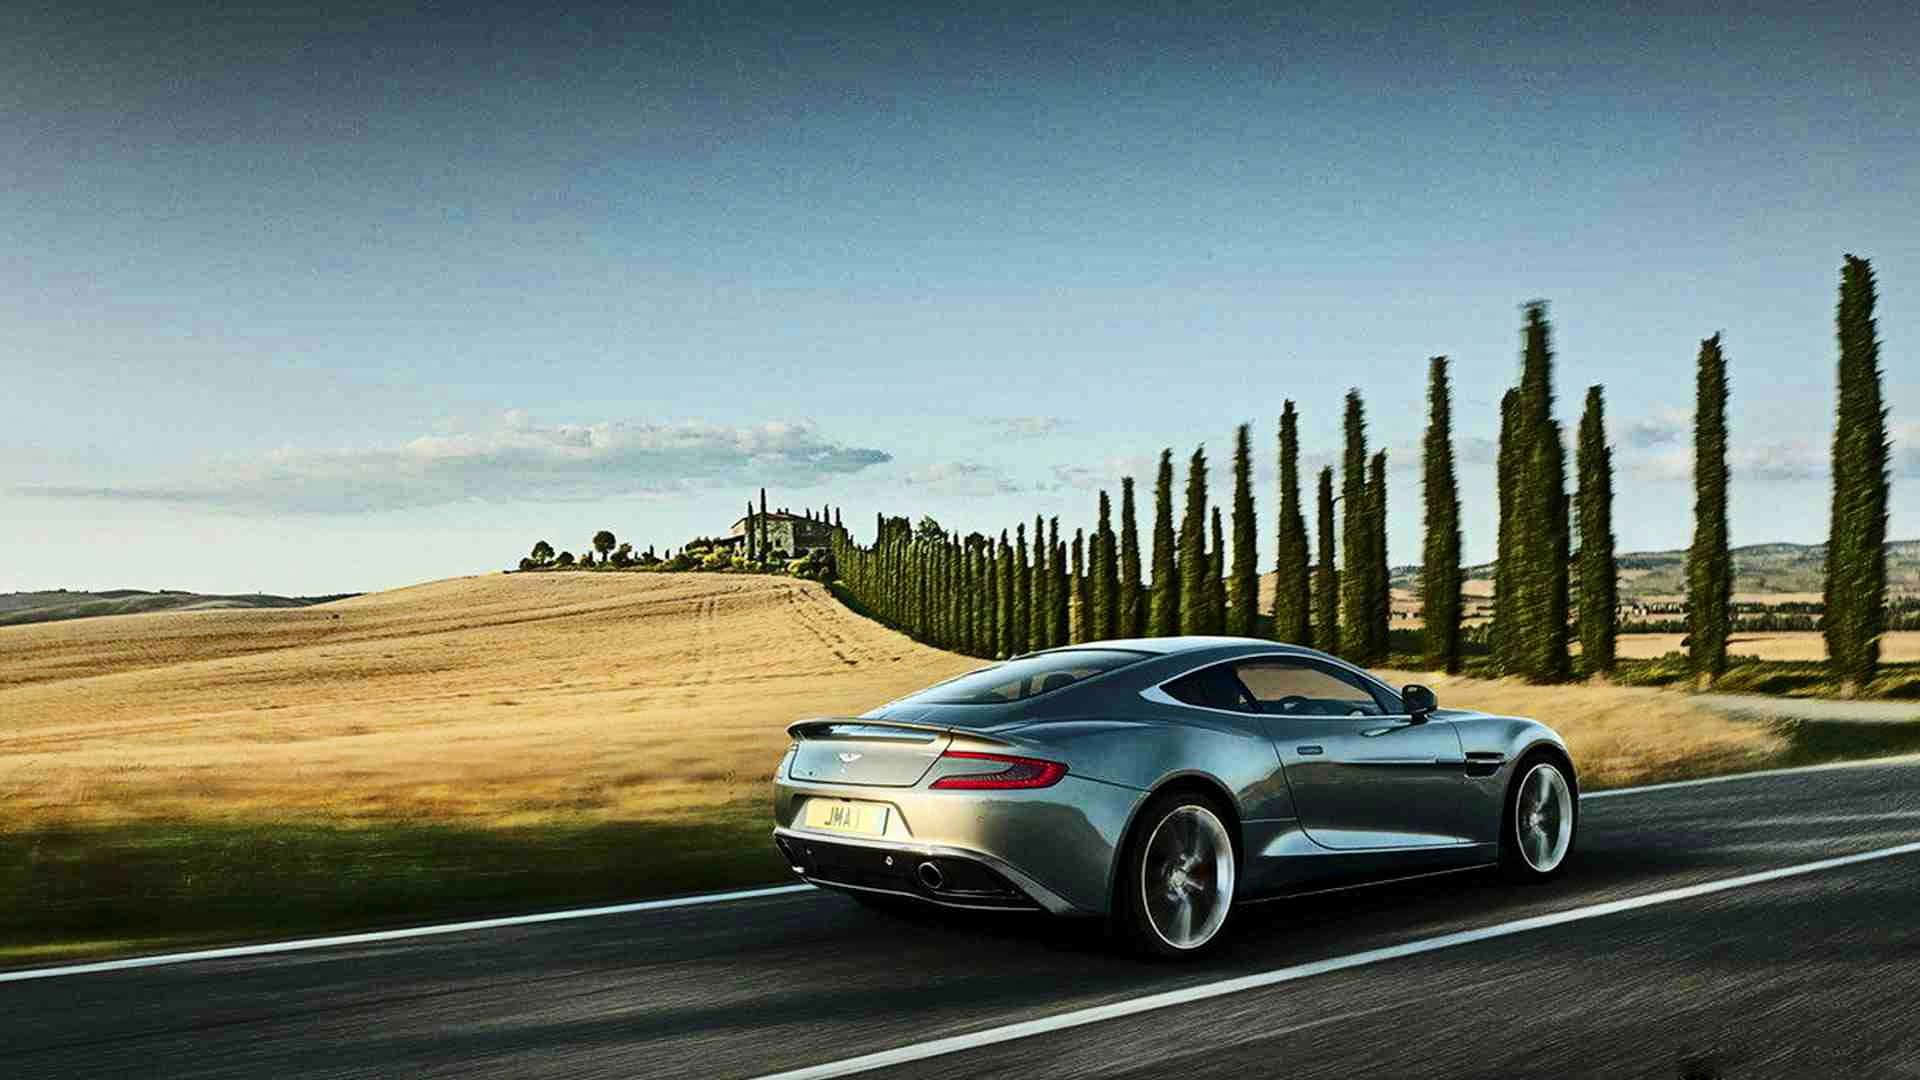 Elimpresionante Aston Martin Db9 En Elegante Movimiento. Fondo de pantalla